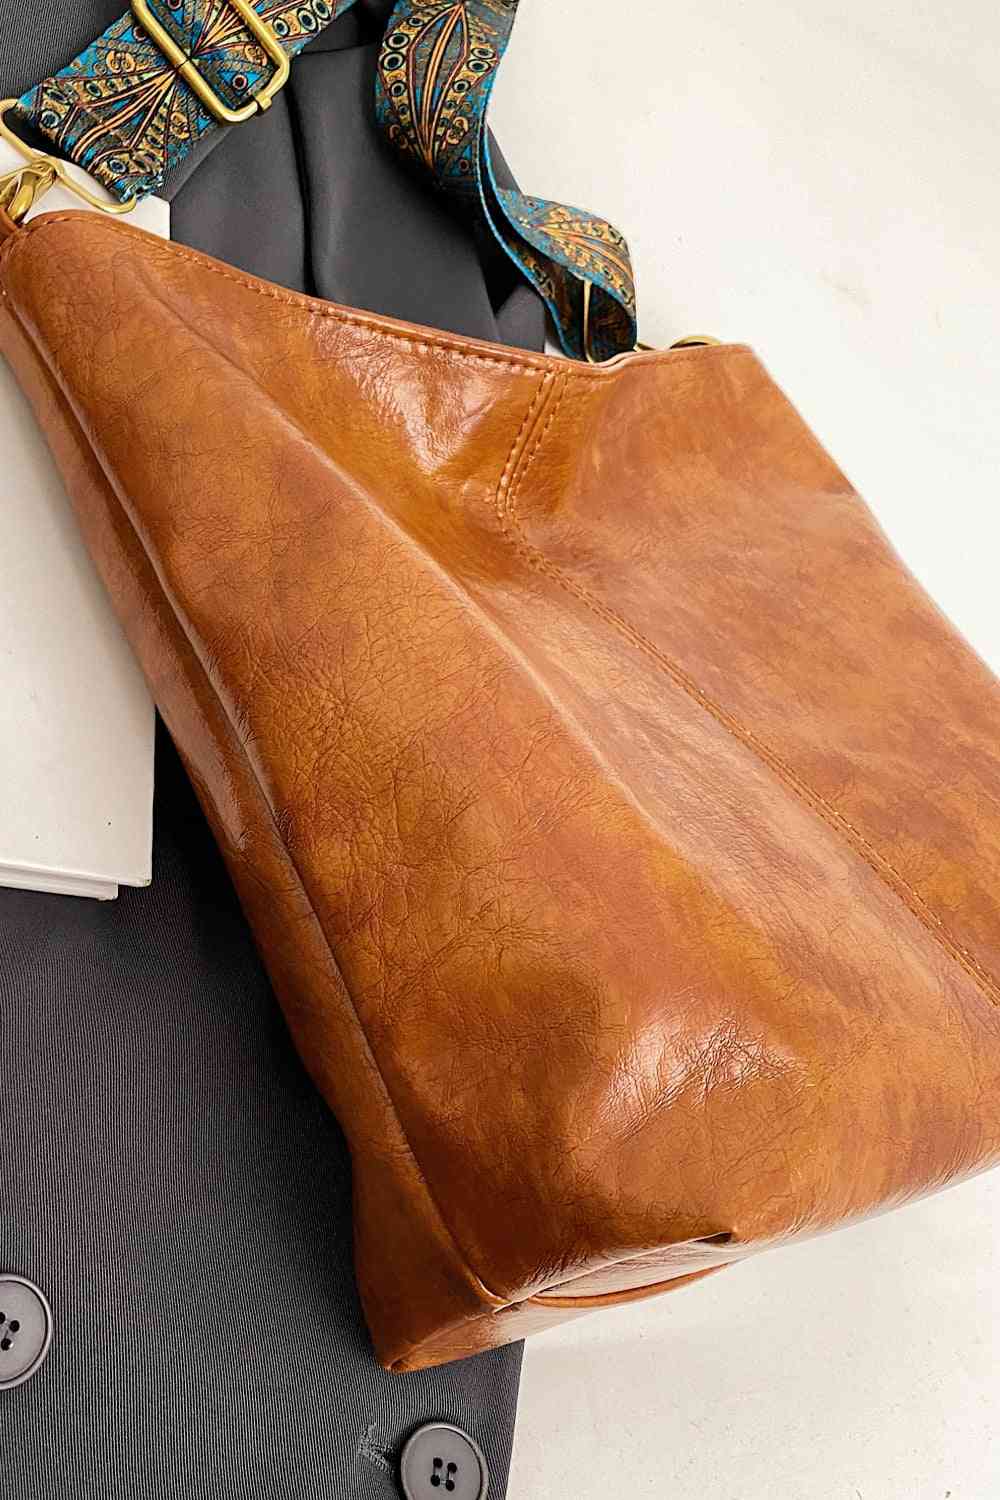 Adored PU Leather Shoulder Bag - Happily Ever Atchison Shop Co.